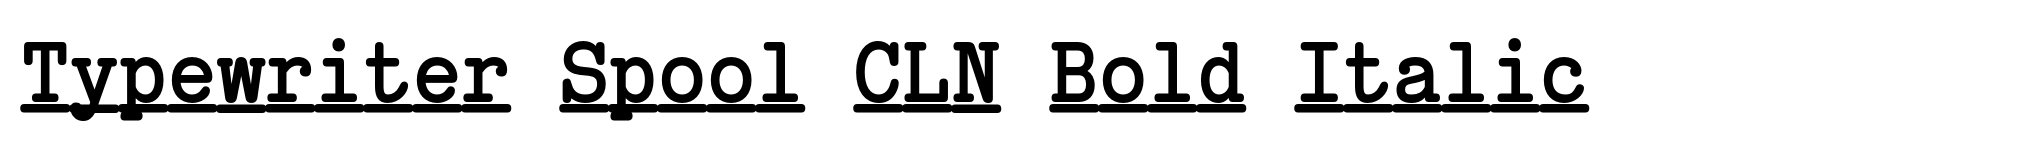 Typewriter Spool CLN Bold Italic image